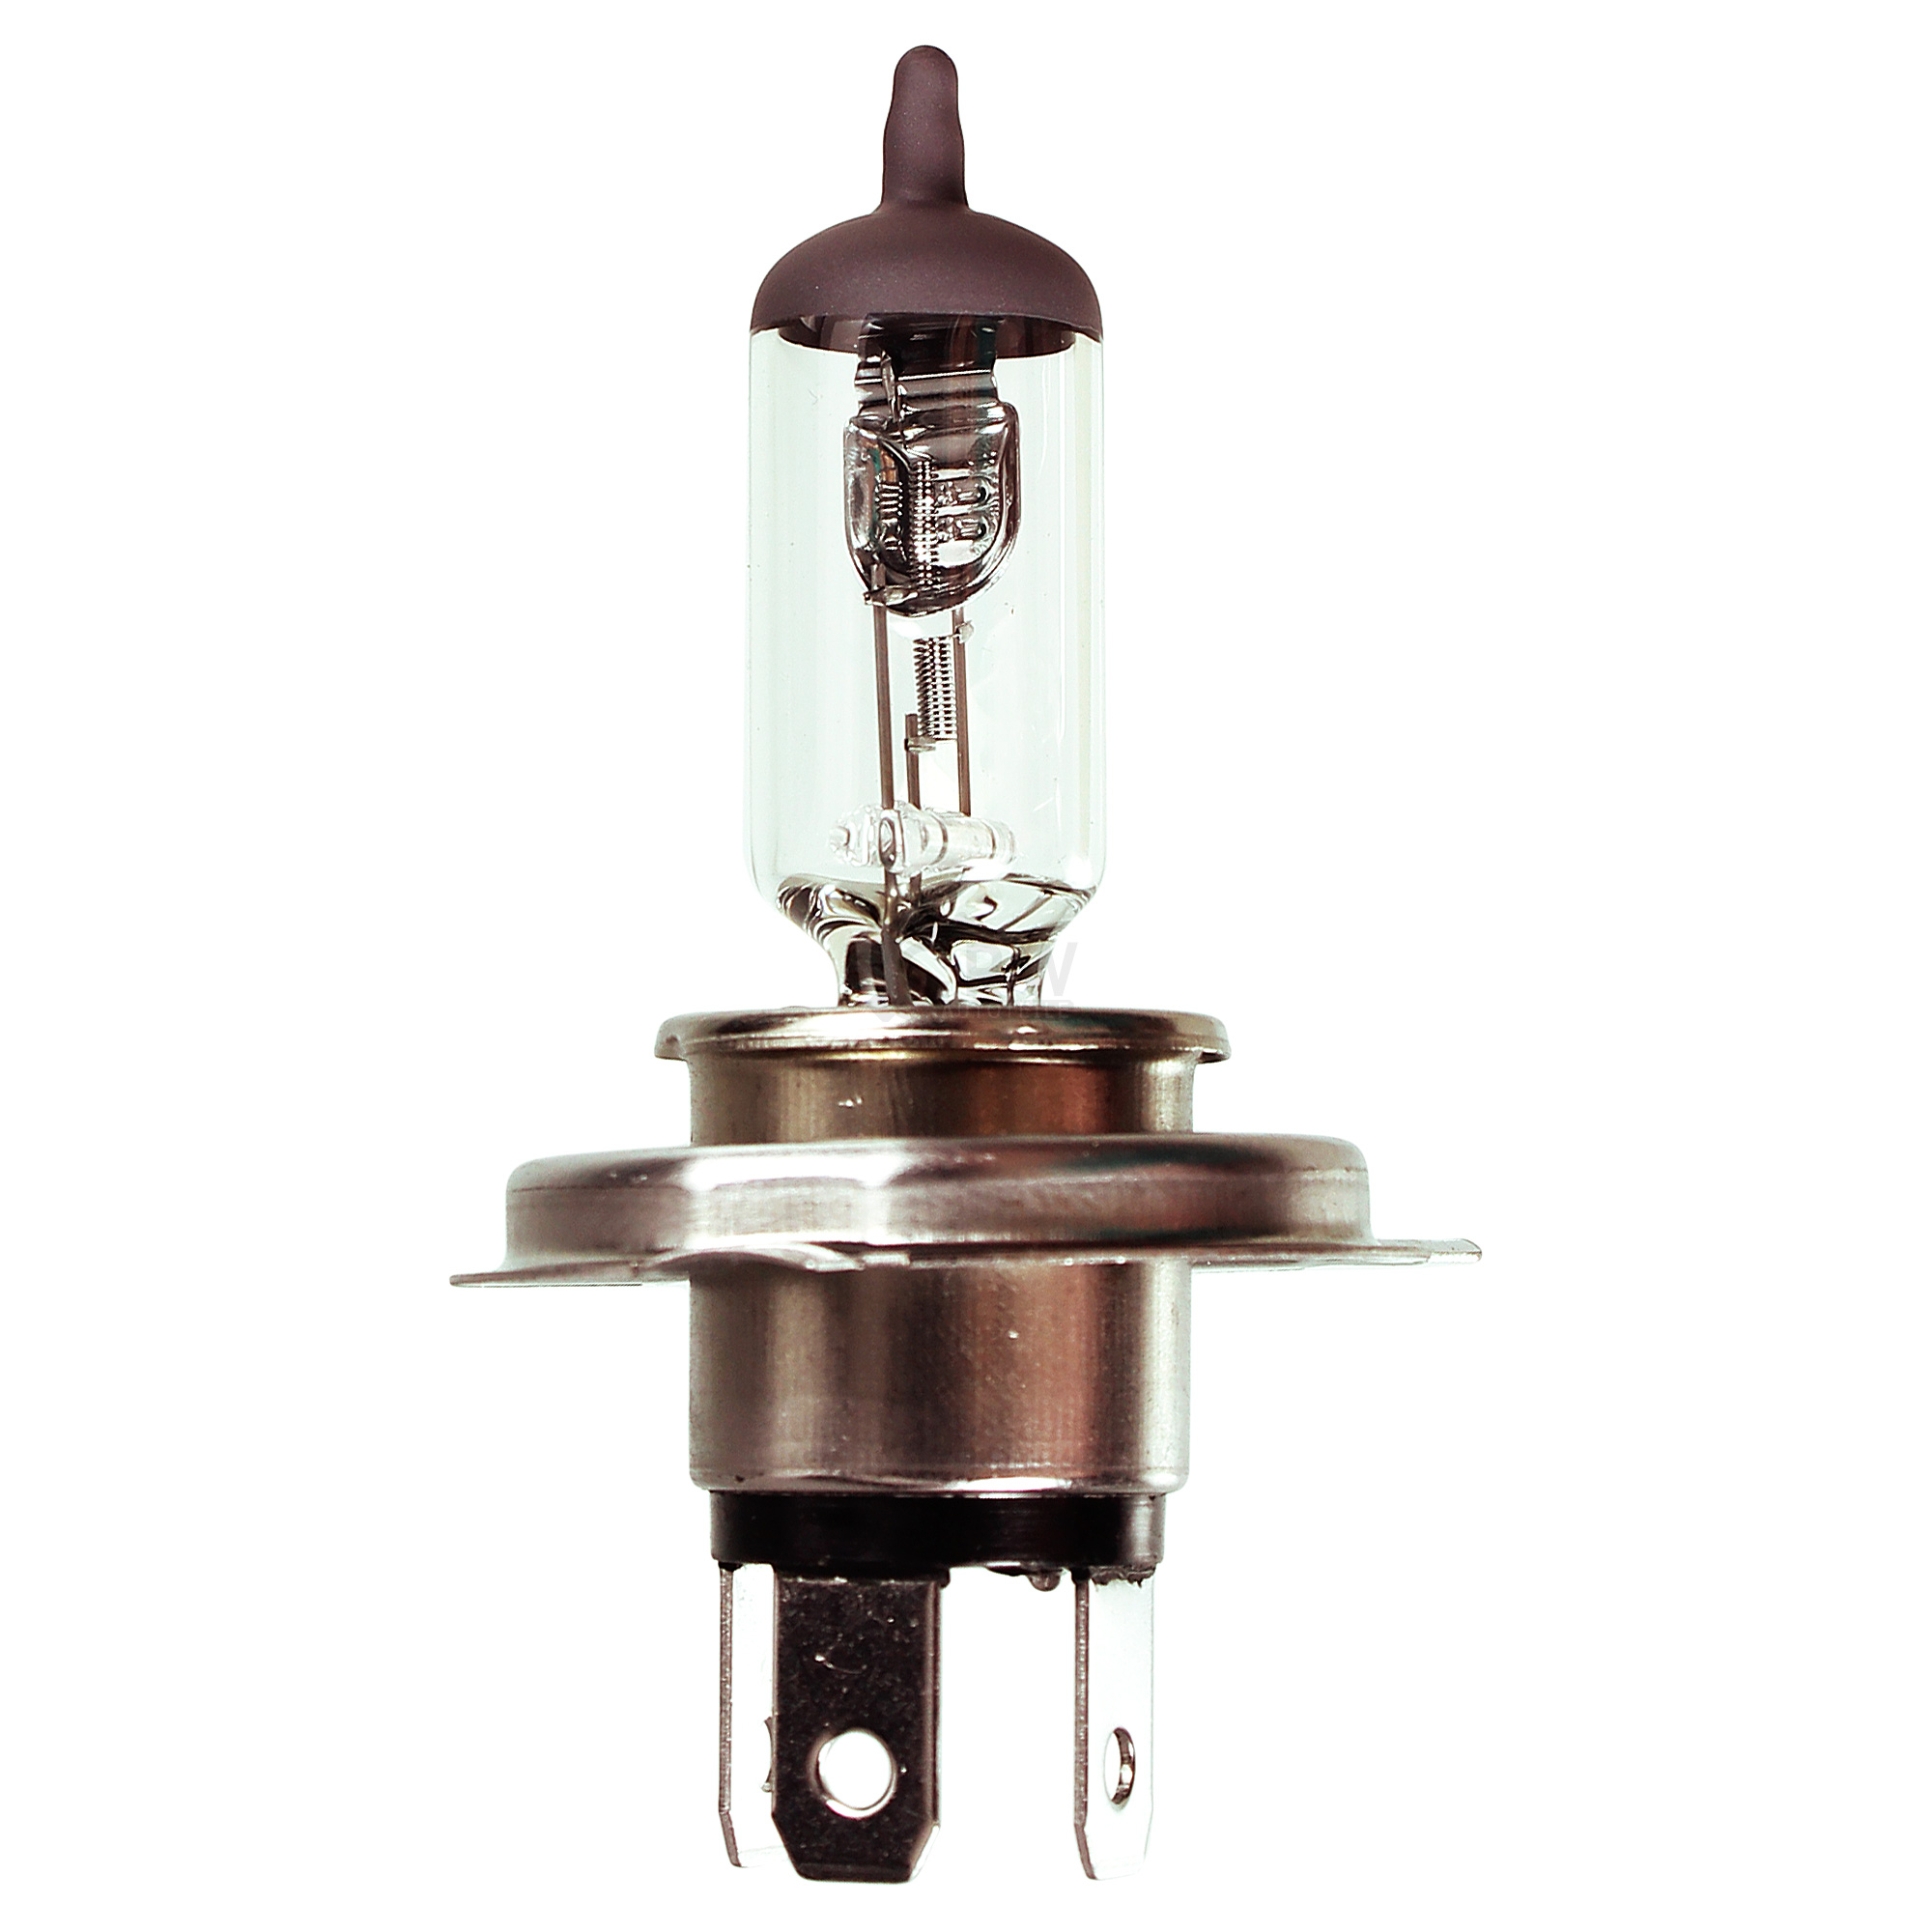 NEOLUX H4 Standard 60/55W P43t 12V Lampe Birne